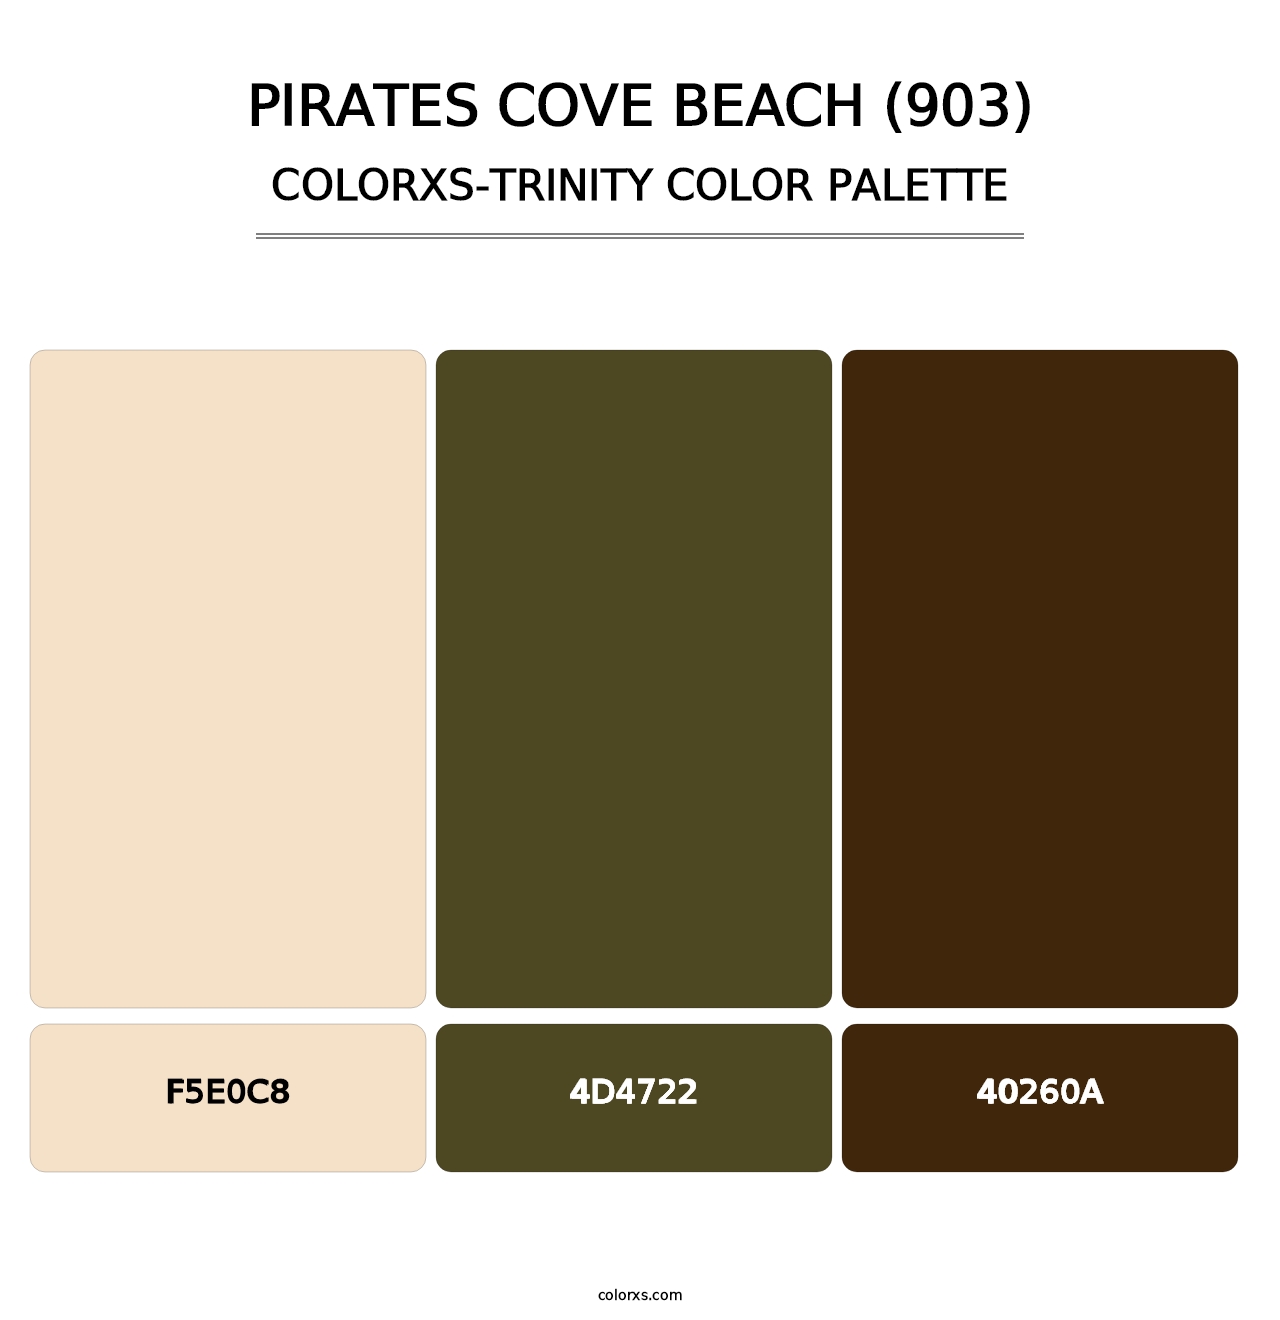 Pirates Cove Beach (903) - Colorxs Trinity Palette